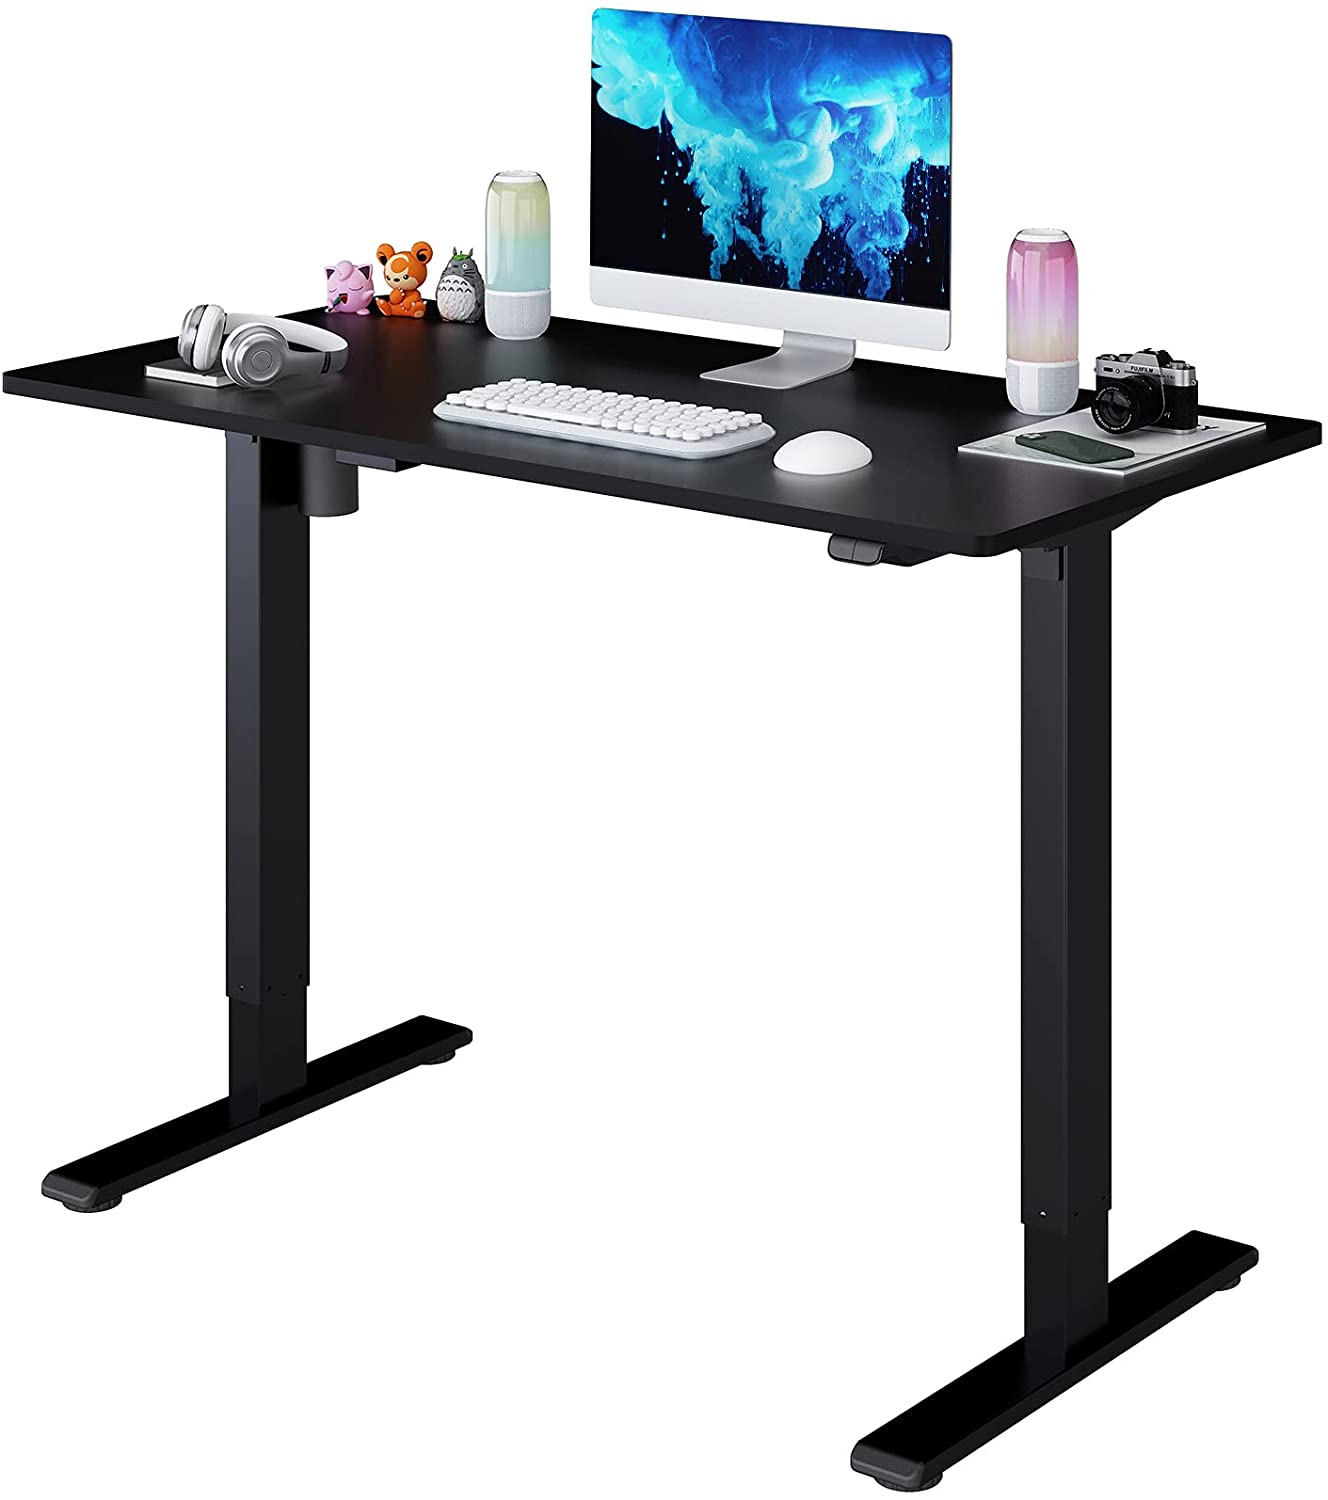 Flexispot Height Adjustable Desk 48 x 24 Inches (Black Variation only) $120